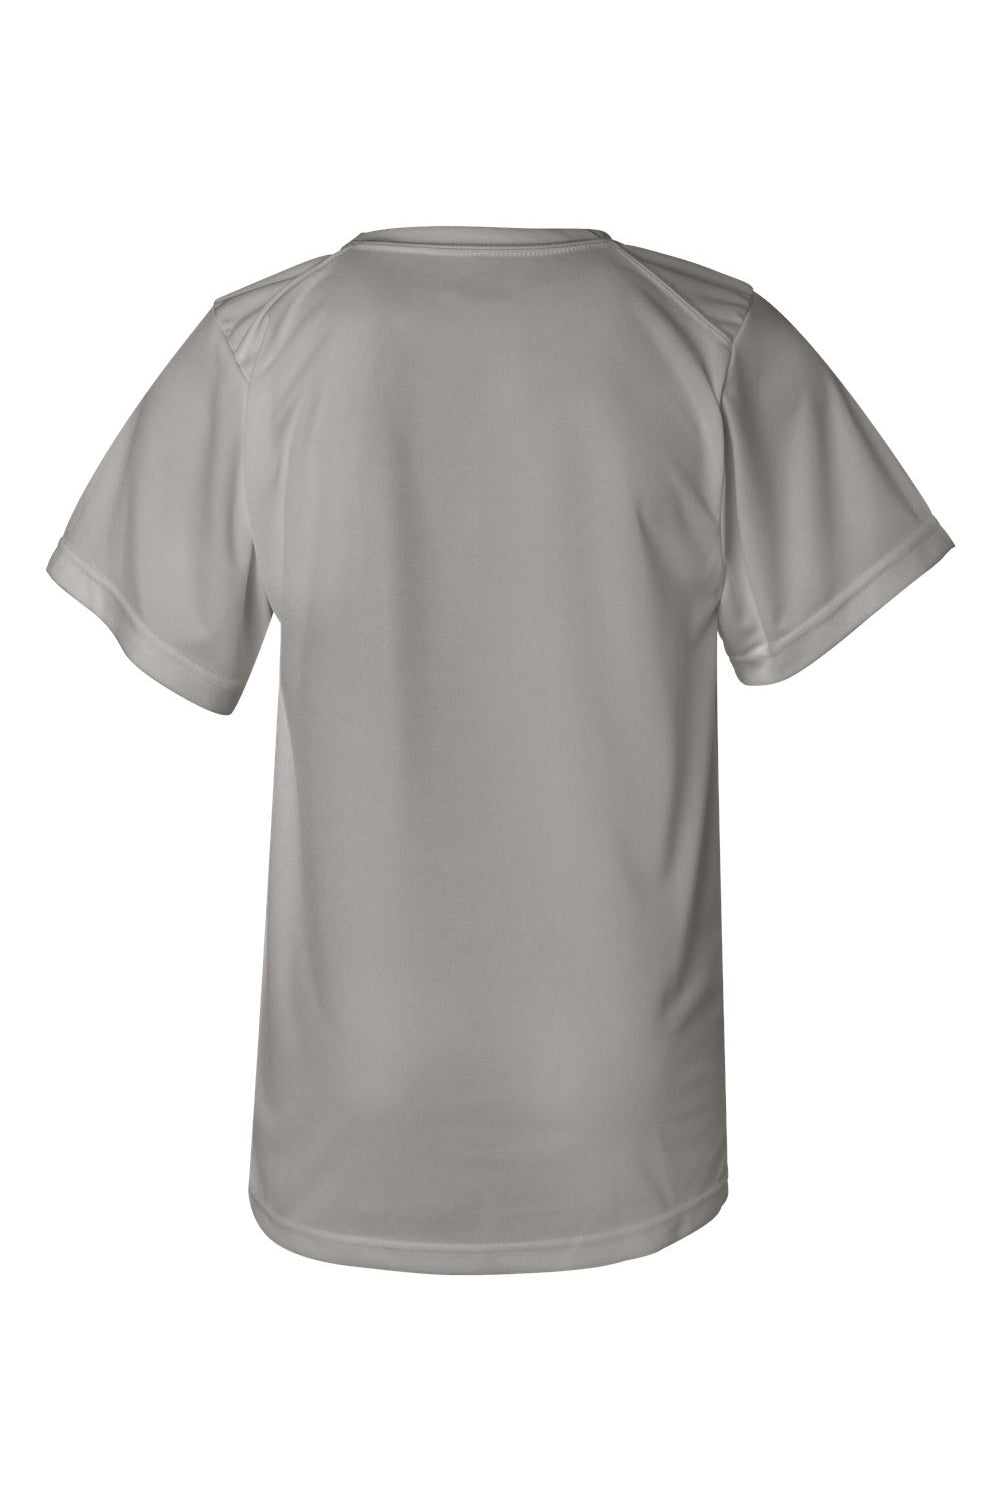 Badger 2120 Youth B-Core Moisture Wicking Short Sleeve Crewneck T-Shirt Silver Grey Flat Back